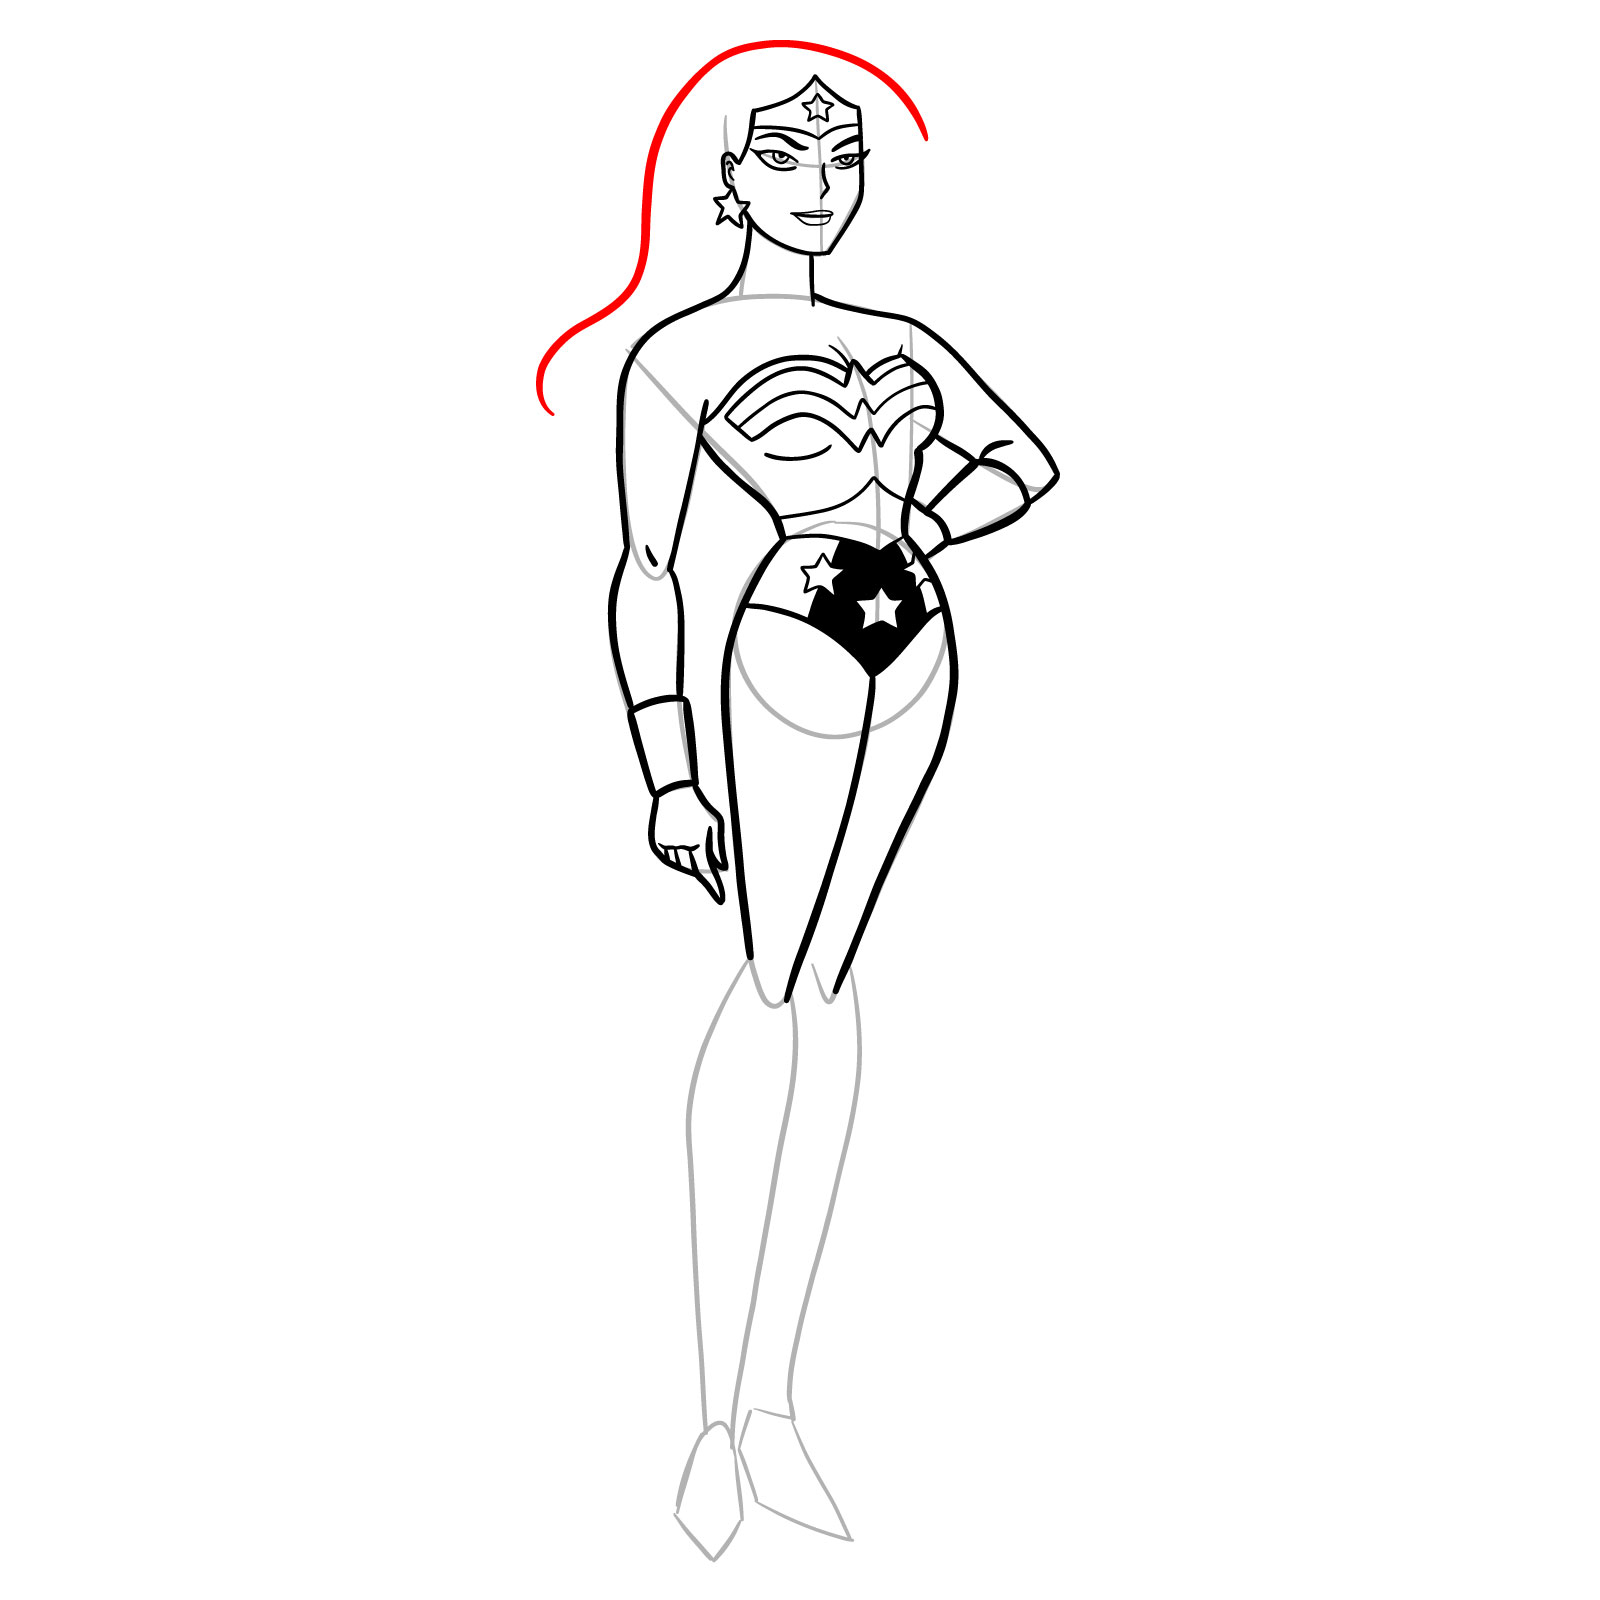 How to draw Wonder Woman cartoon style - step 25